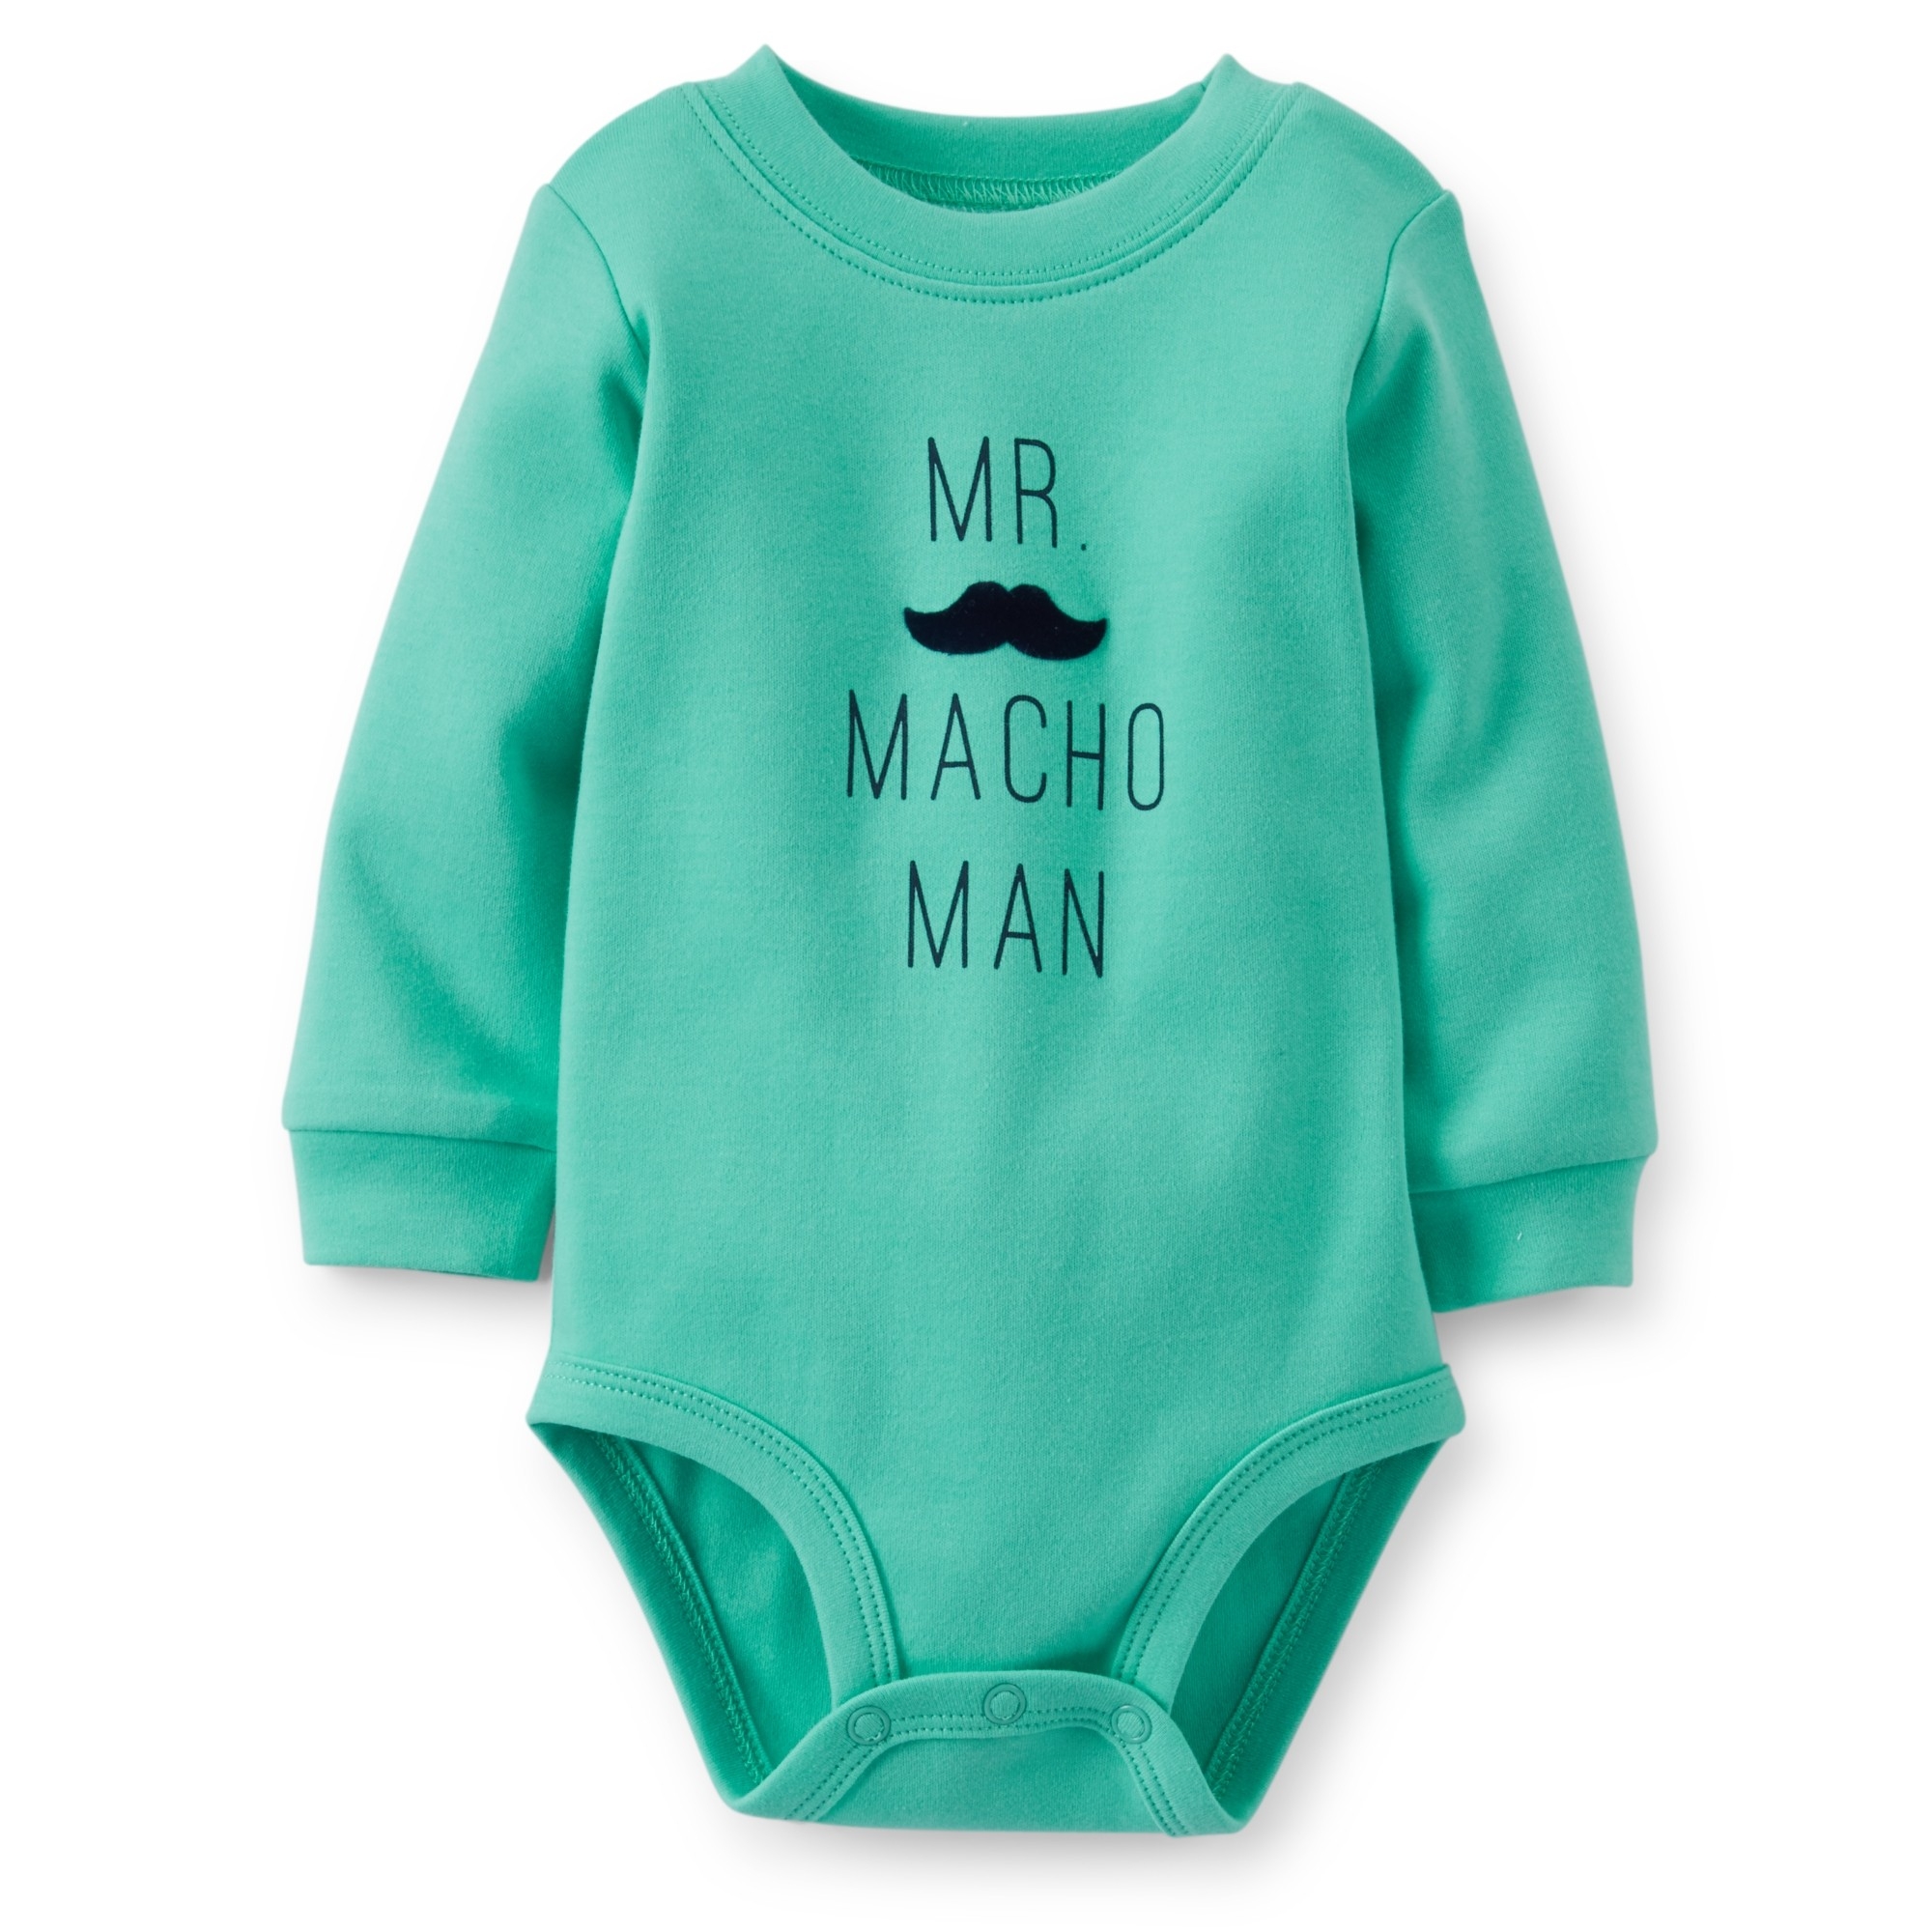 Carter's Newborn Boy's Long-Sleeve Bodysuit - Mr. Macho Man